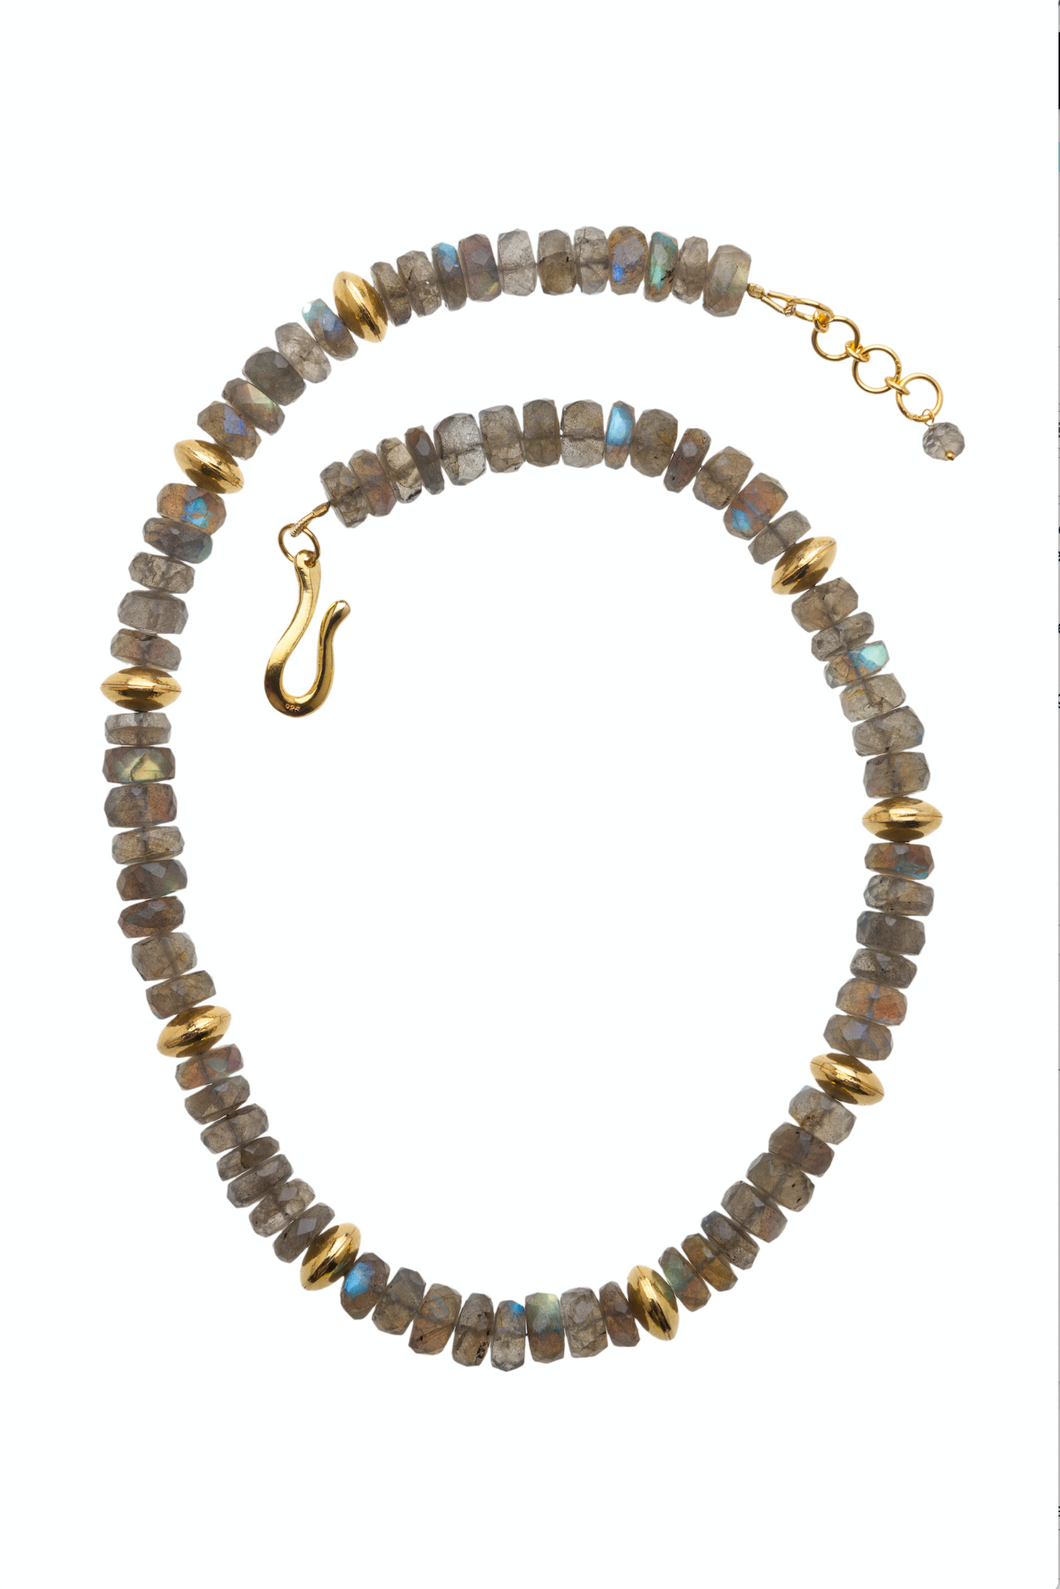 Labradorite Chunky Gemstone Necklace in 24kt gold vermeil  N006-L